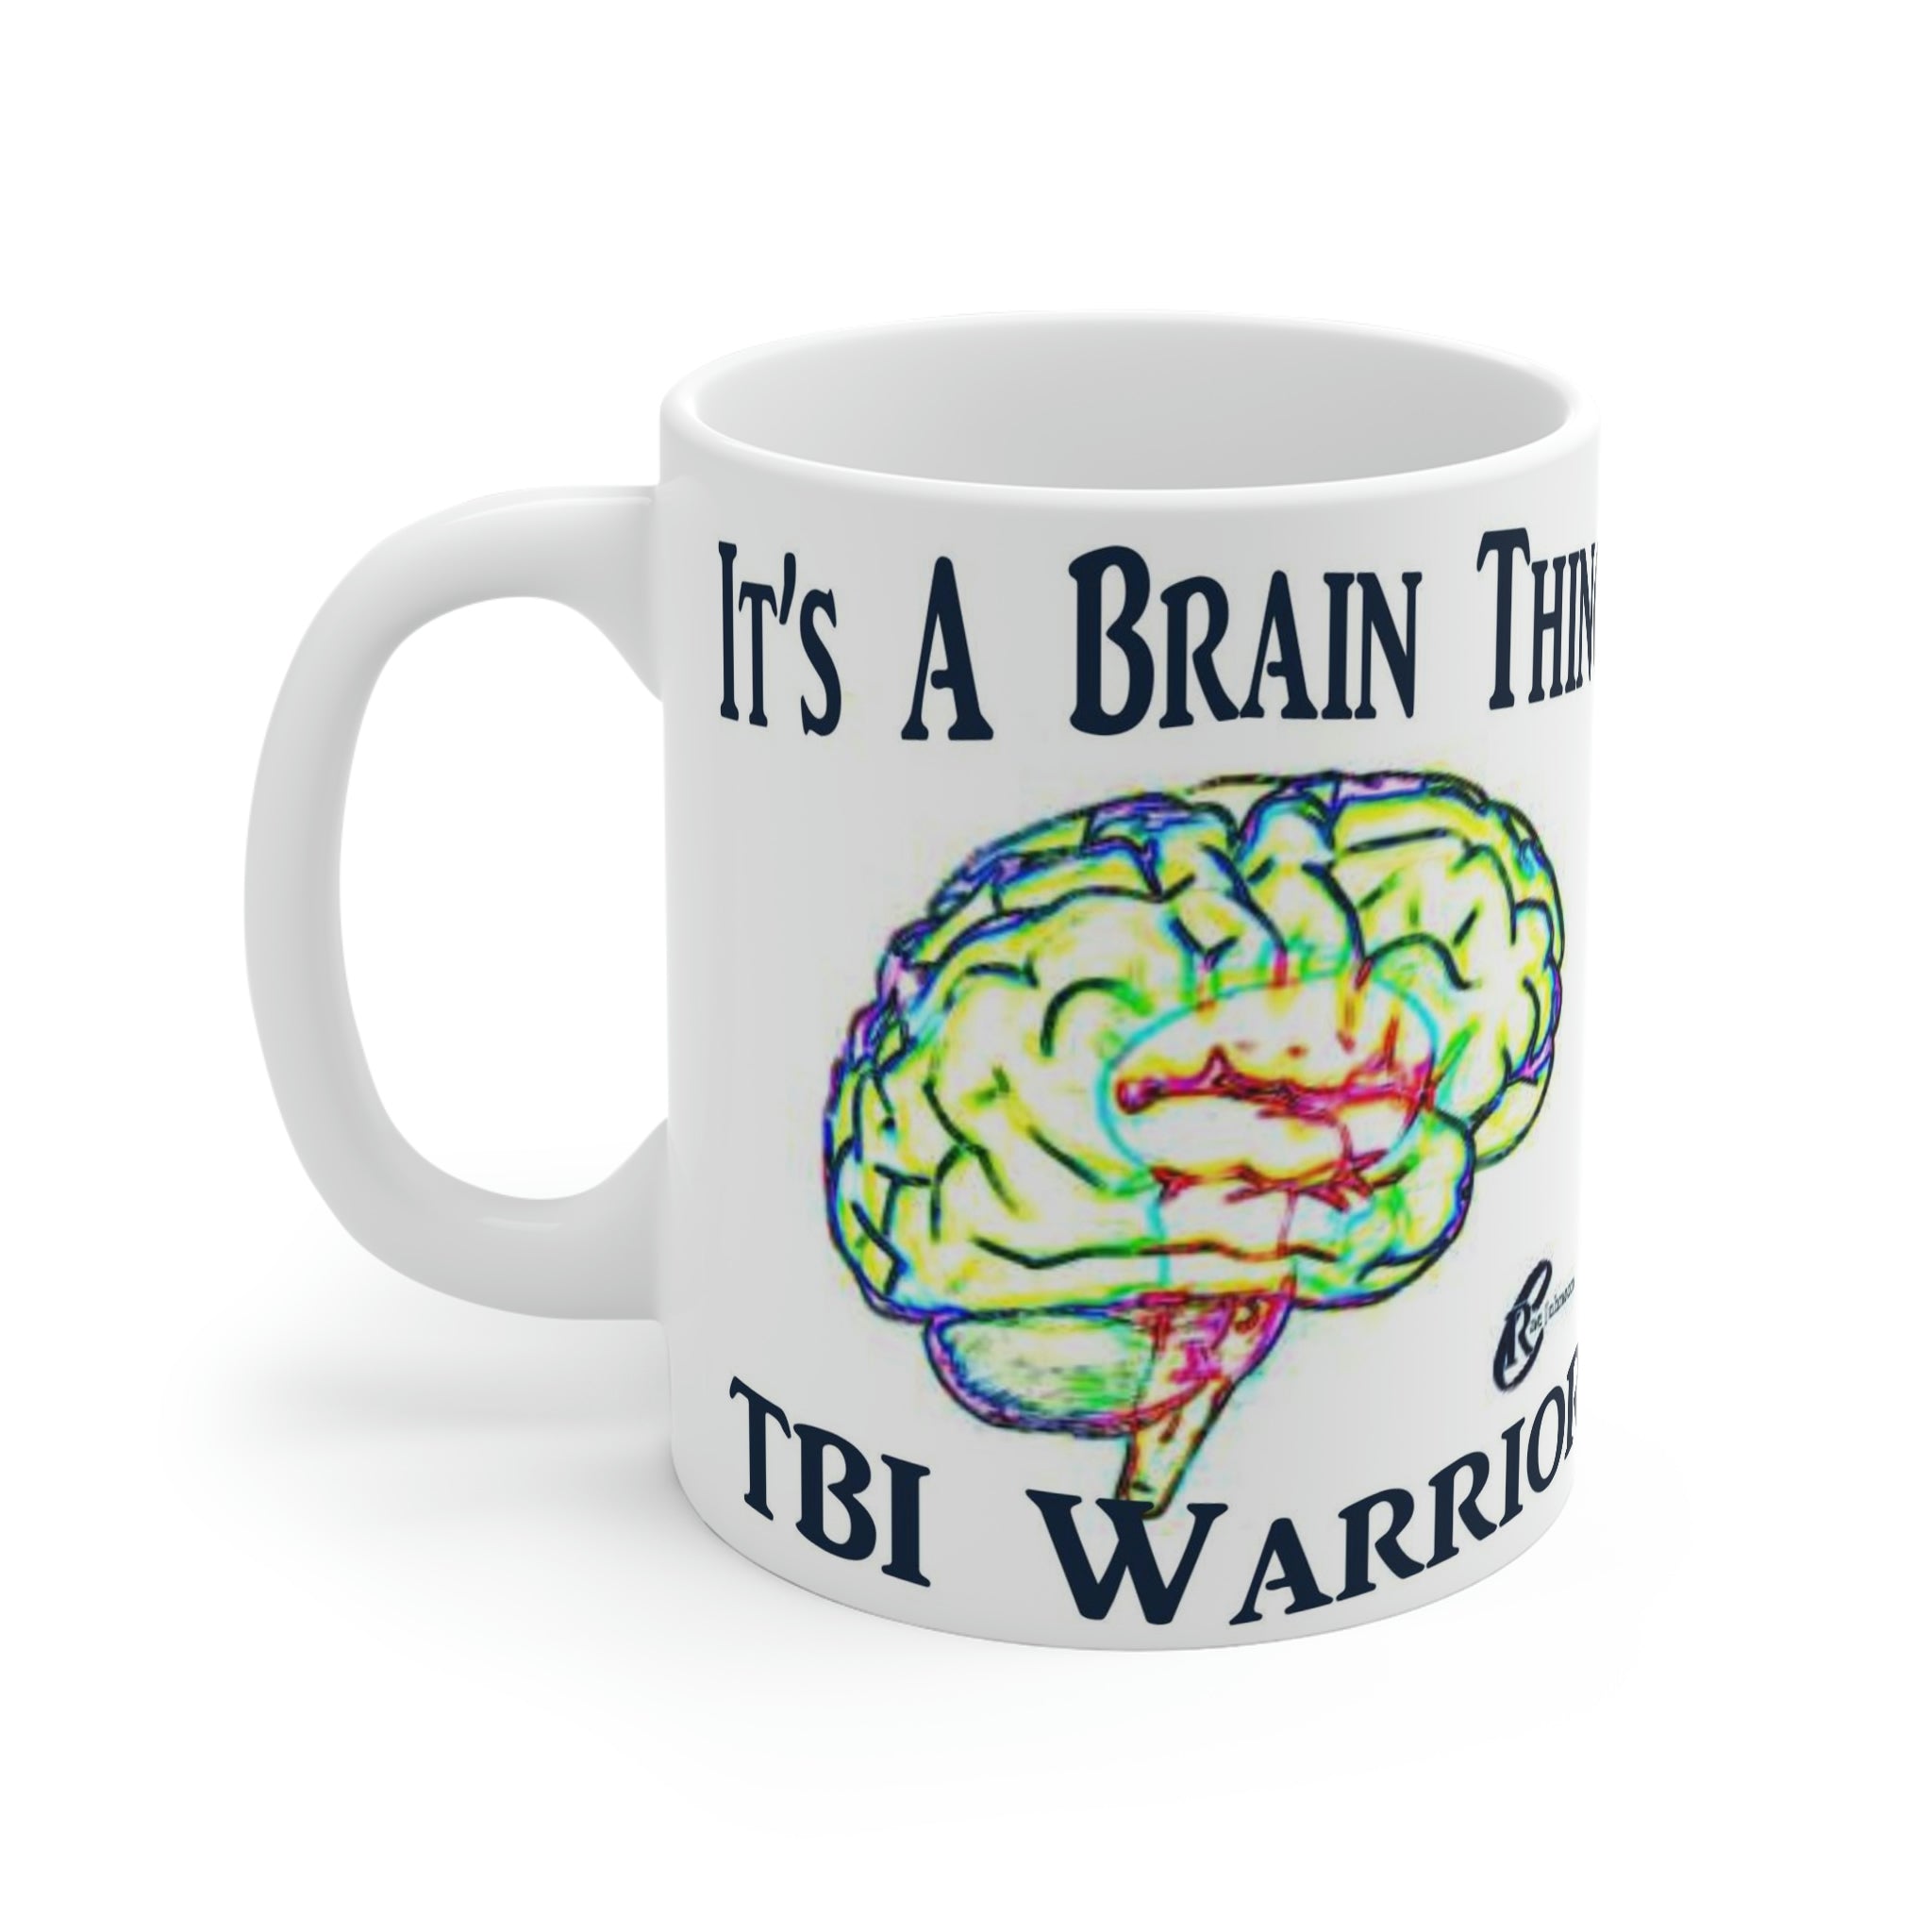 TBI Warrior Brain Bling "It's a Brain thing" Mug White 11oz